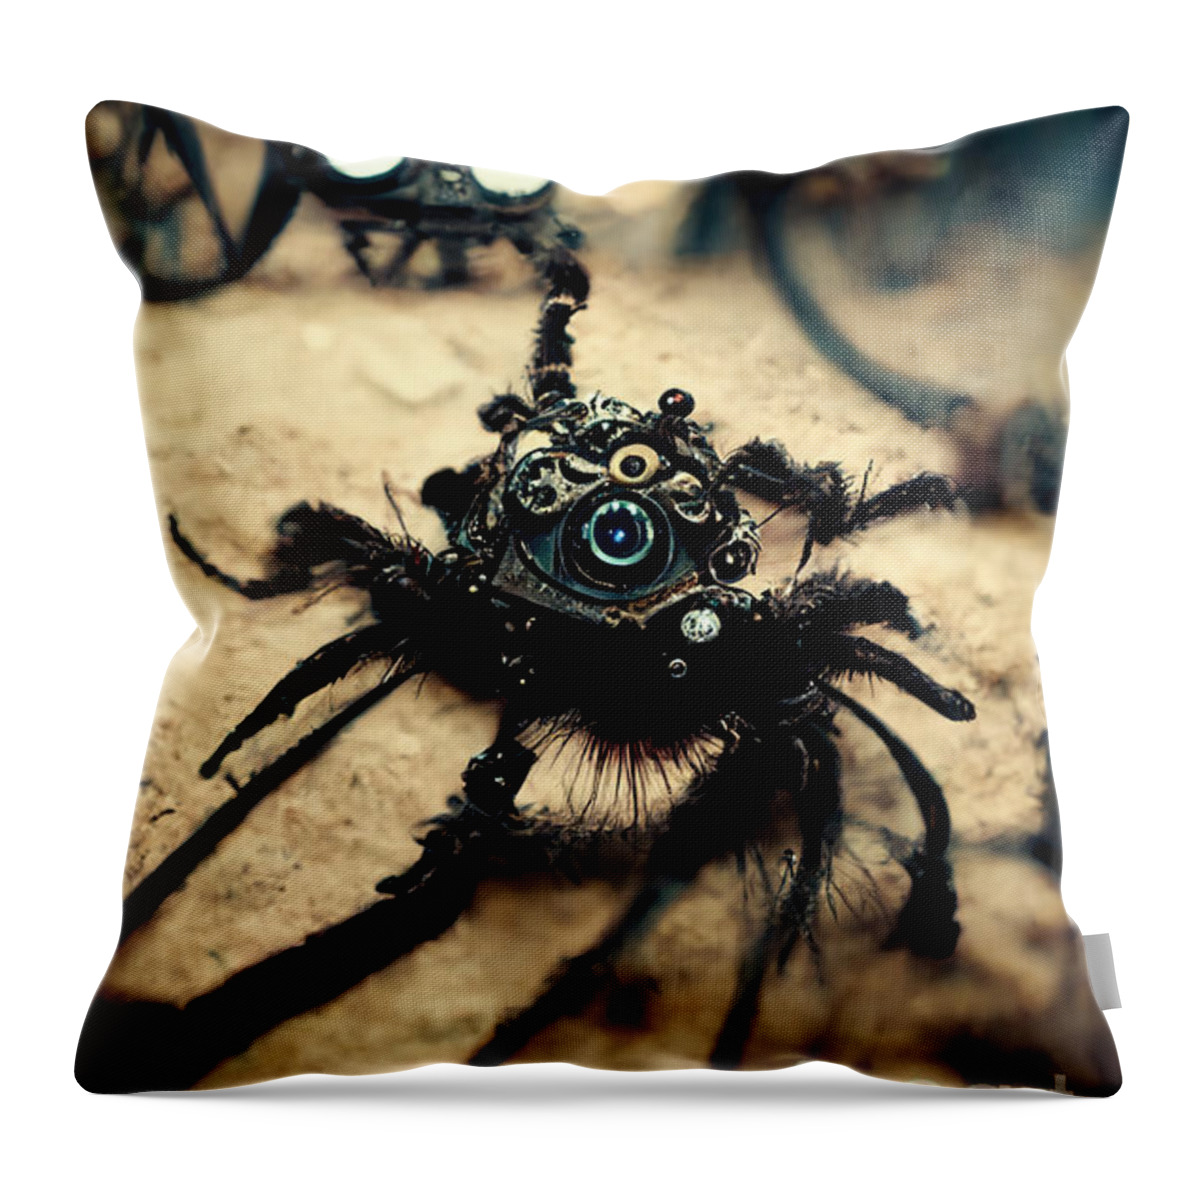 Steampunk Throw Pillow featuring the digital art Steampunk tarantula #1 by Sabantha